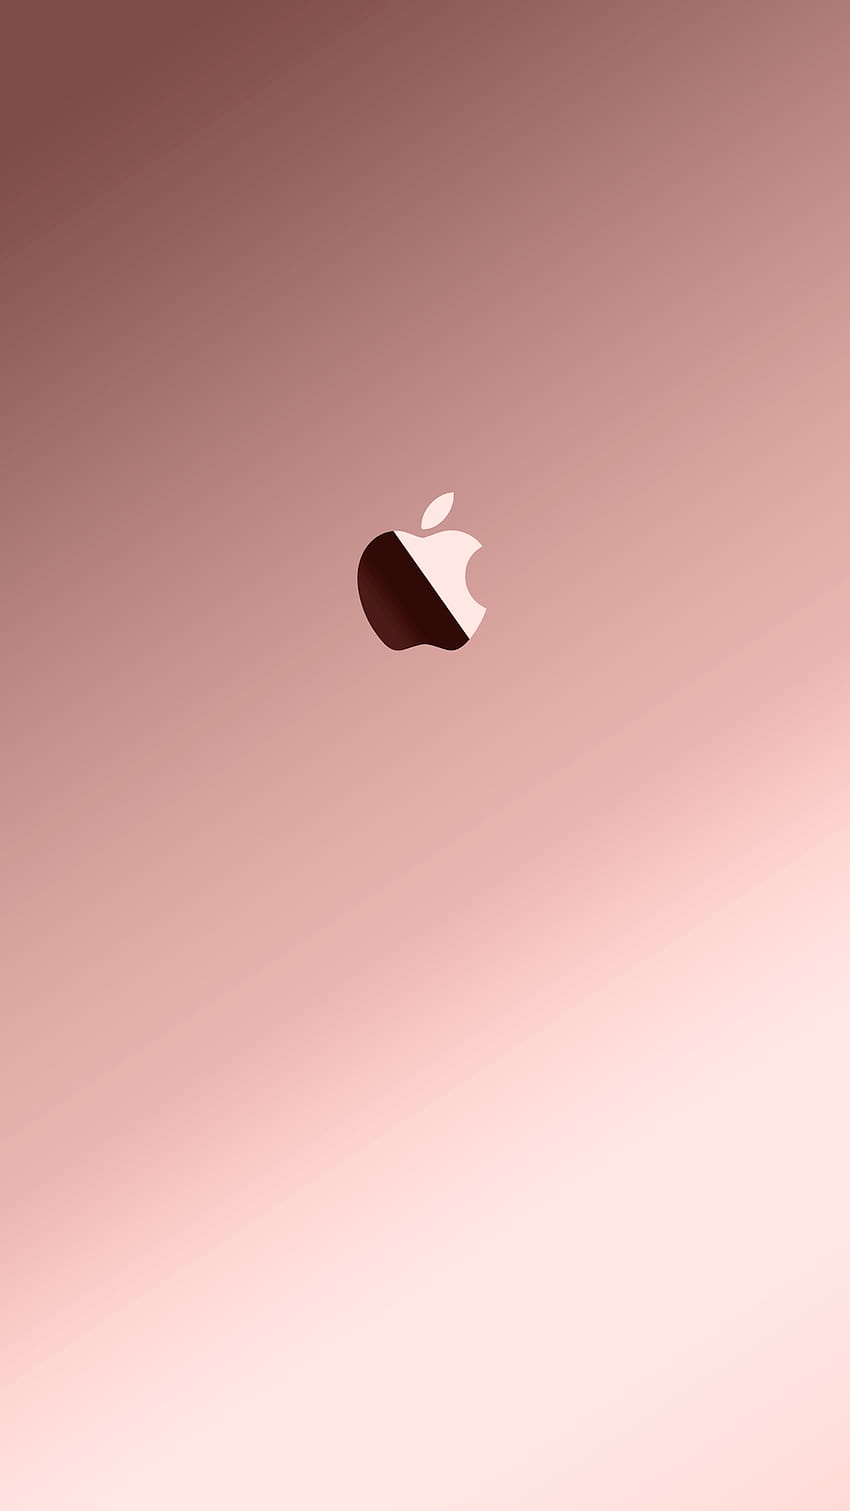 650 Best Apples in Pink and Red ideas  apple logo wallpaper apple  wallpaper apple logo